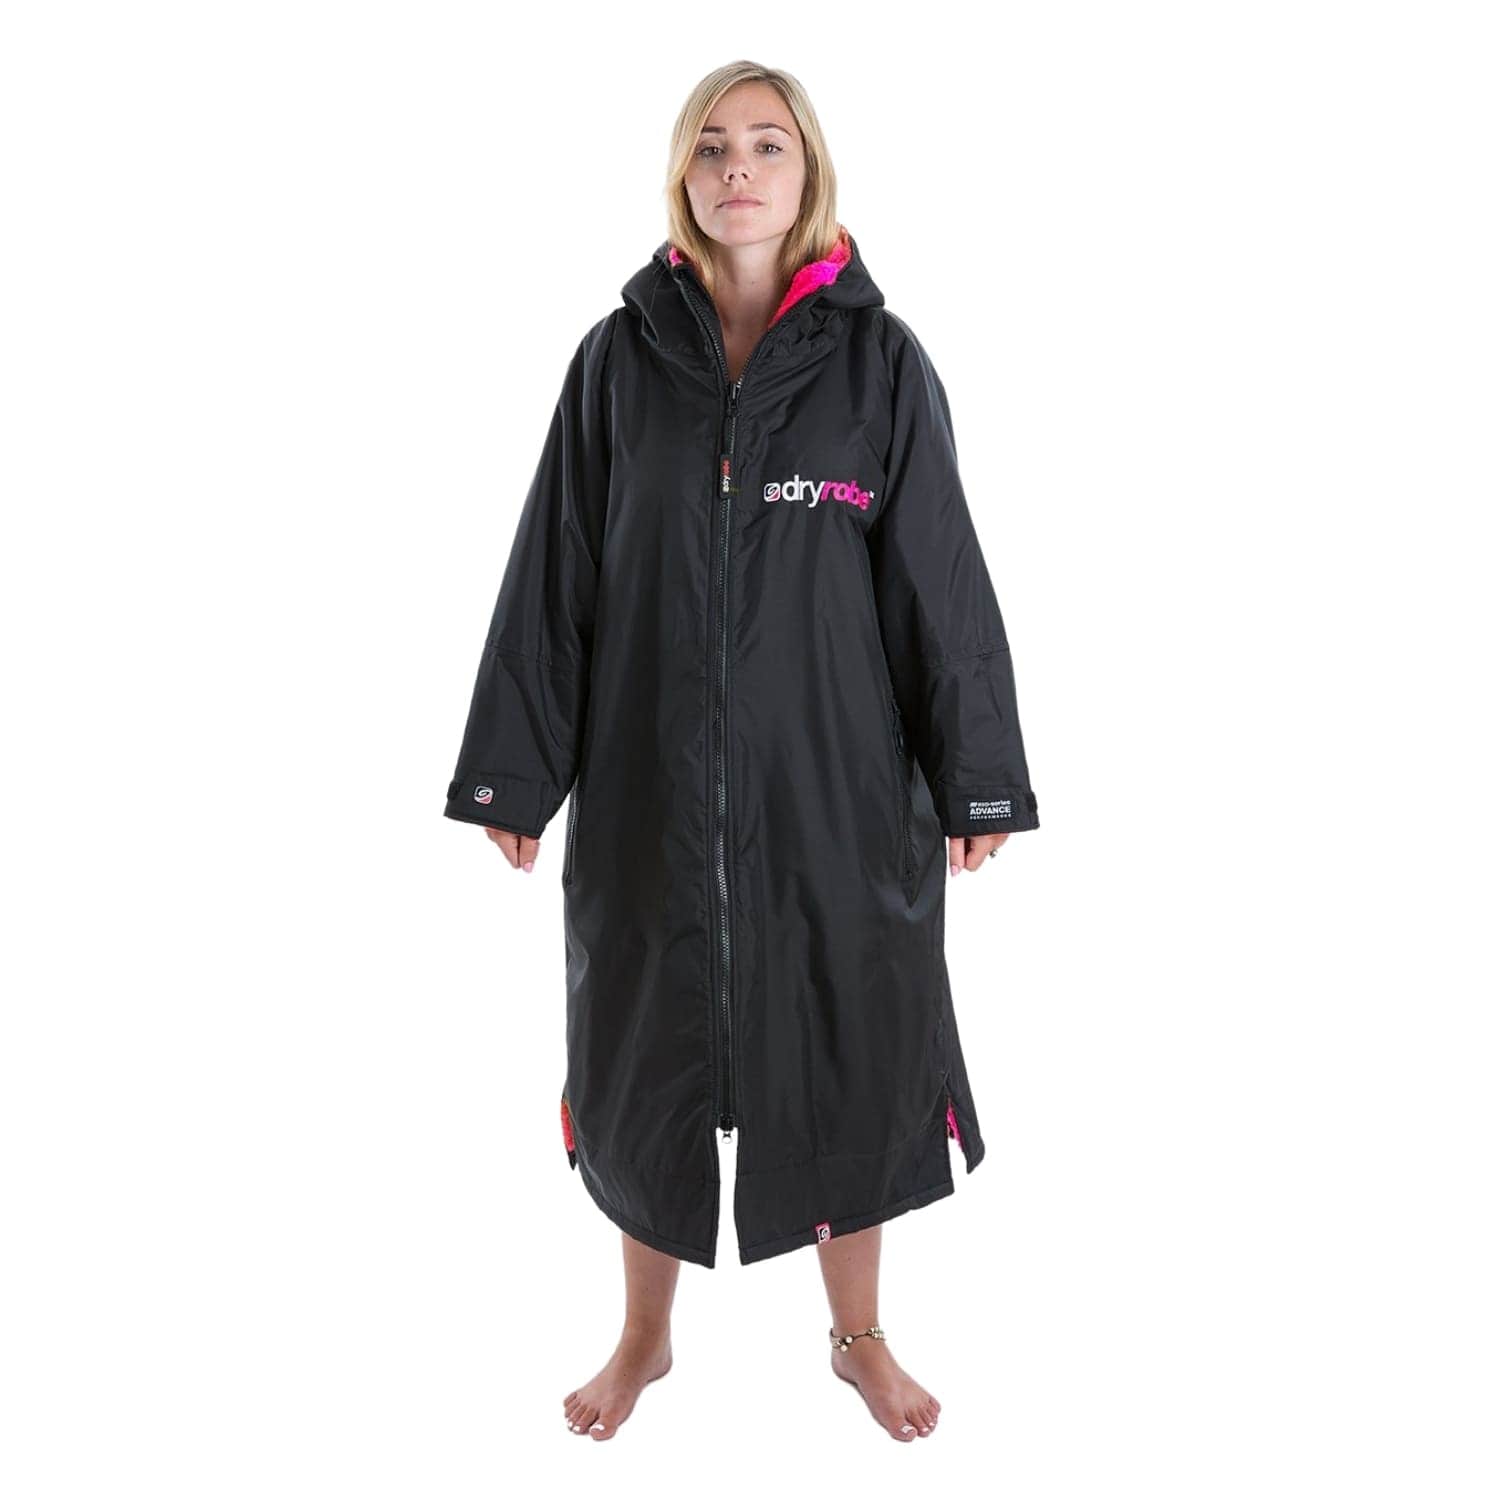 Dryrobe Advance Long Sleeve Drying & Changing Robe - Black/Pink - Changing Robe Poncho Towel by Dryrobe